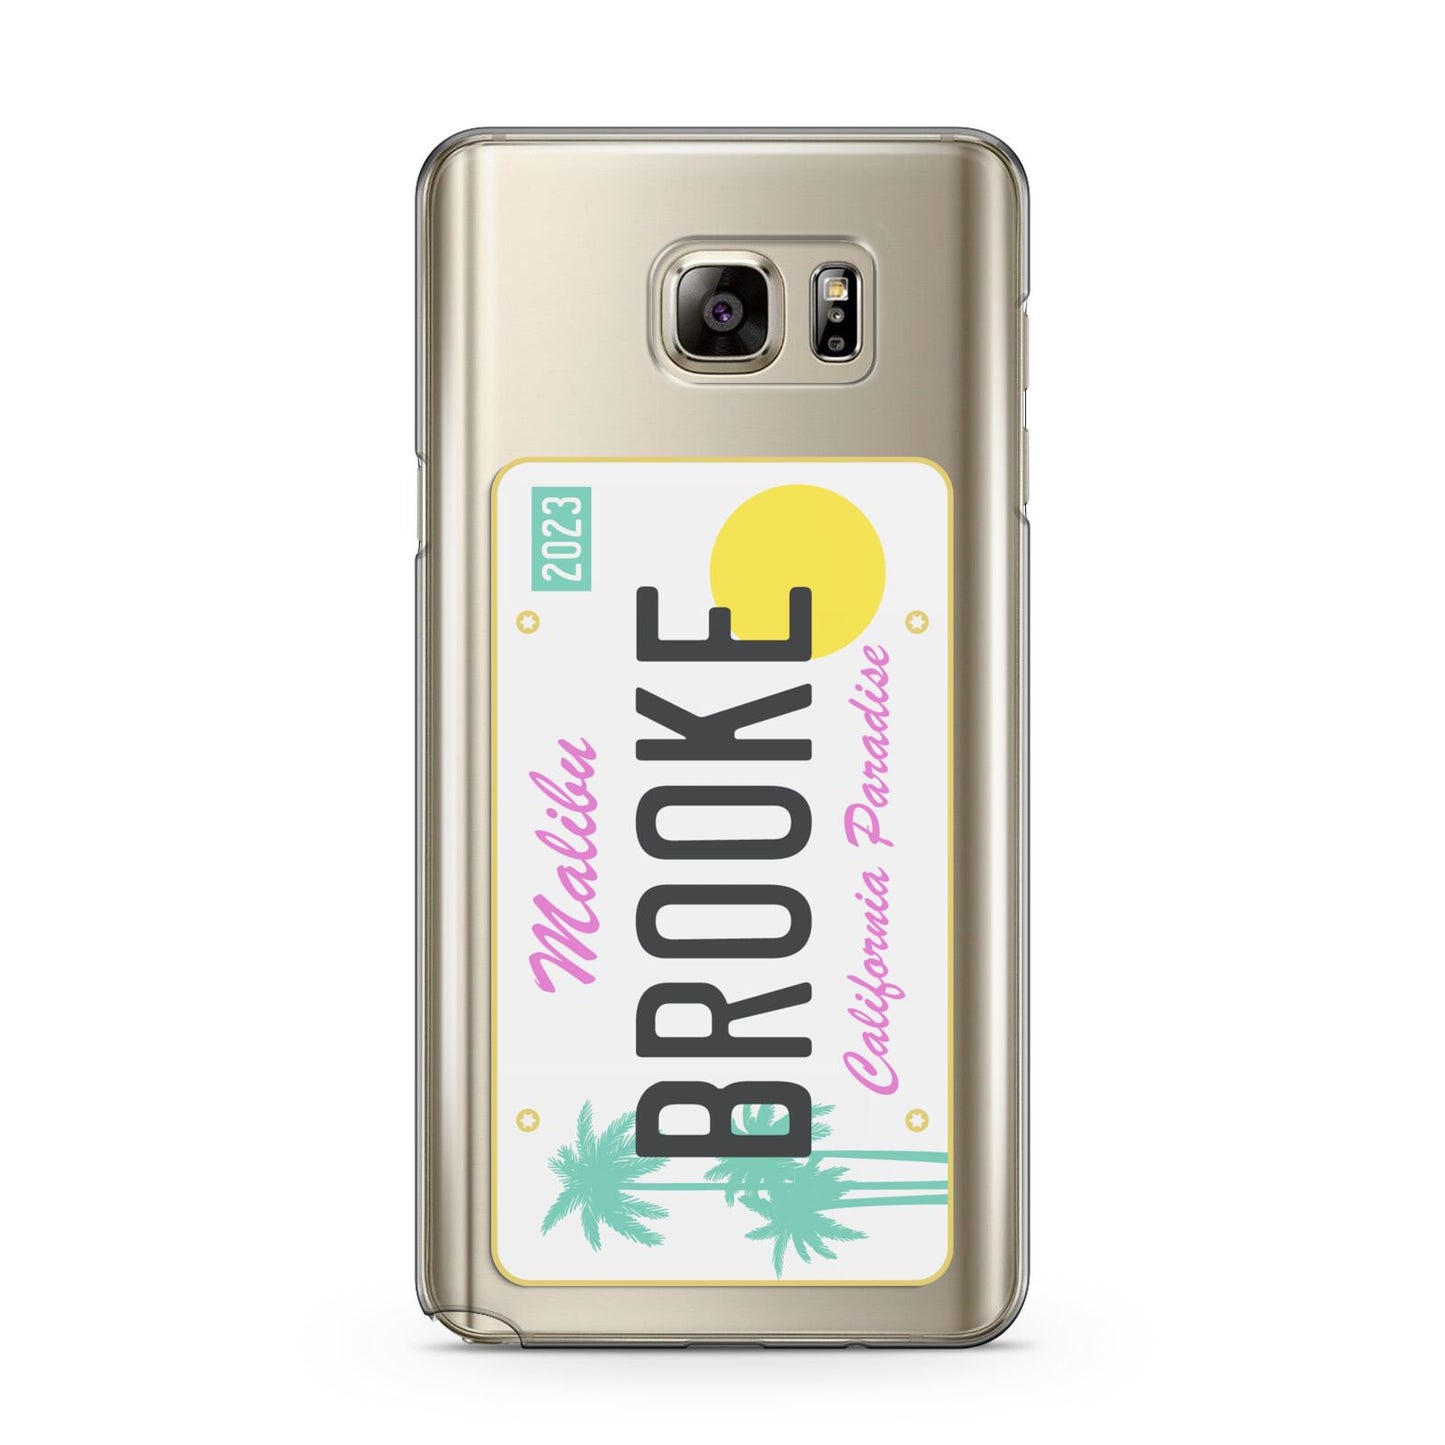 Personalised Malibu License Plate Samsung Galaxy Note 5 Case